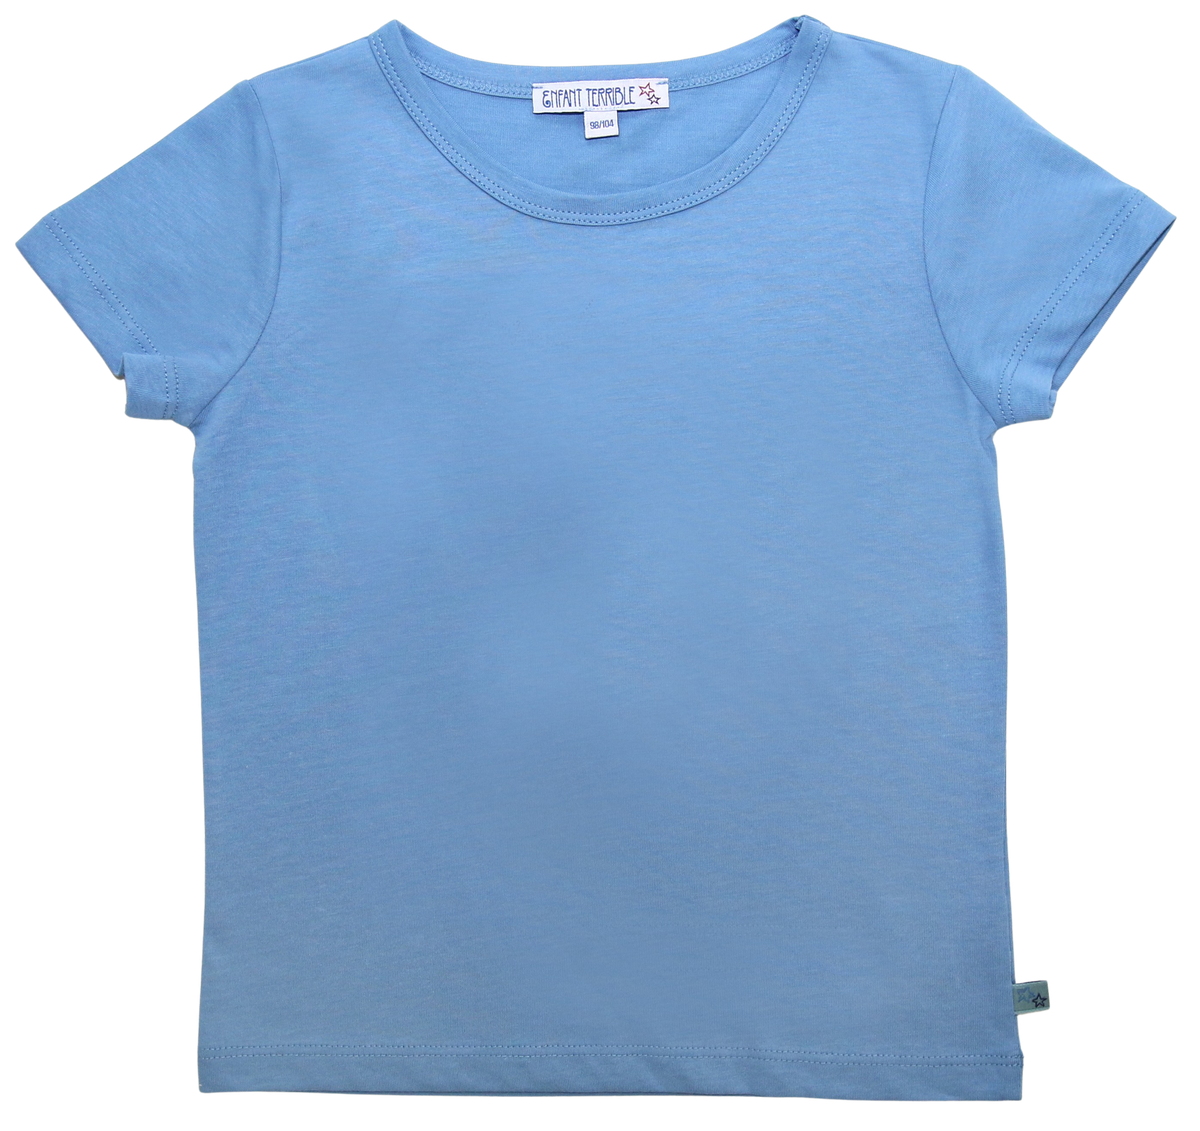 T-Shirt uni in skyblau Enfant Terrible